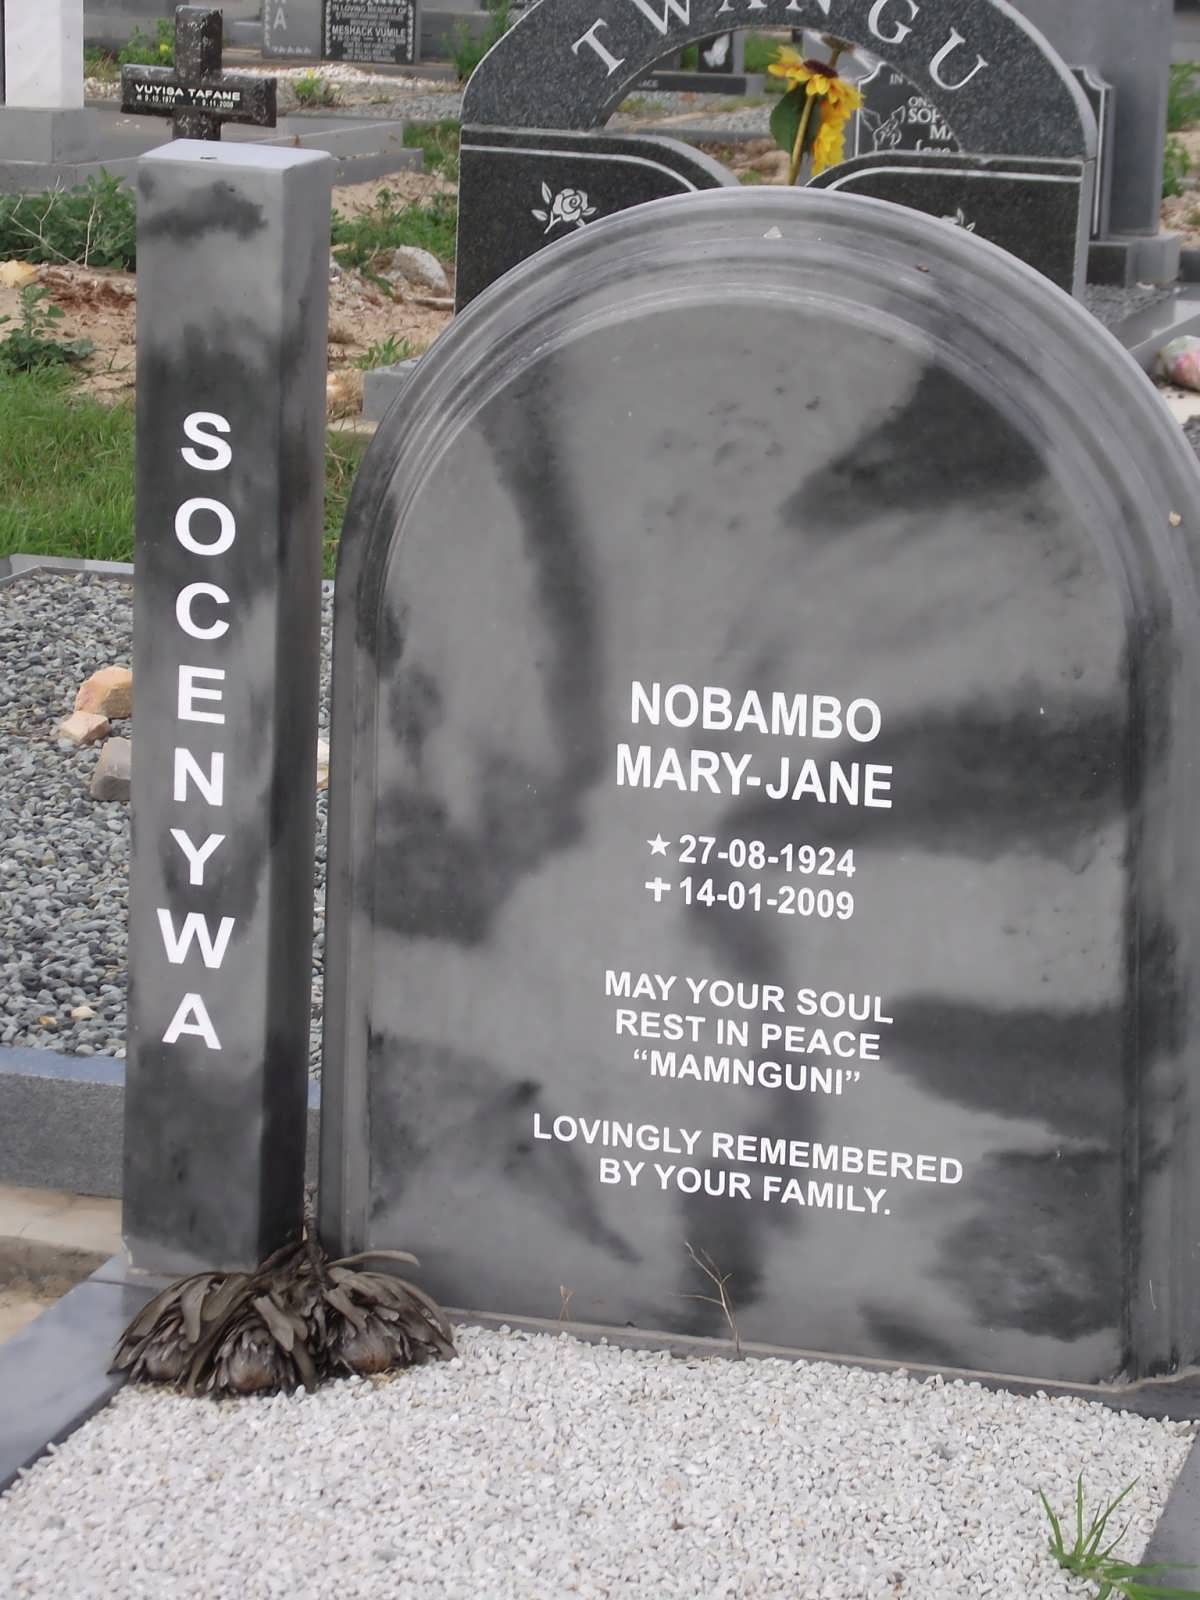 SOCENYWA Nobambo Mary-Jane 1924-2009